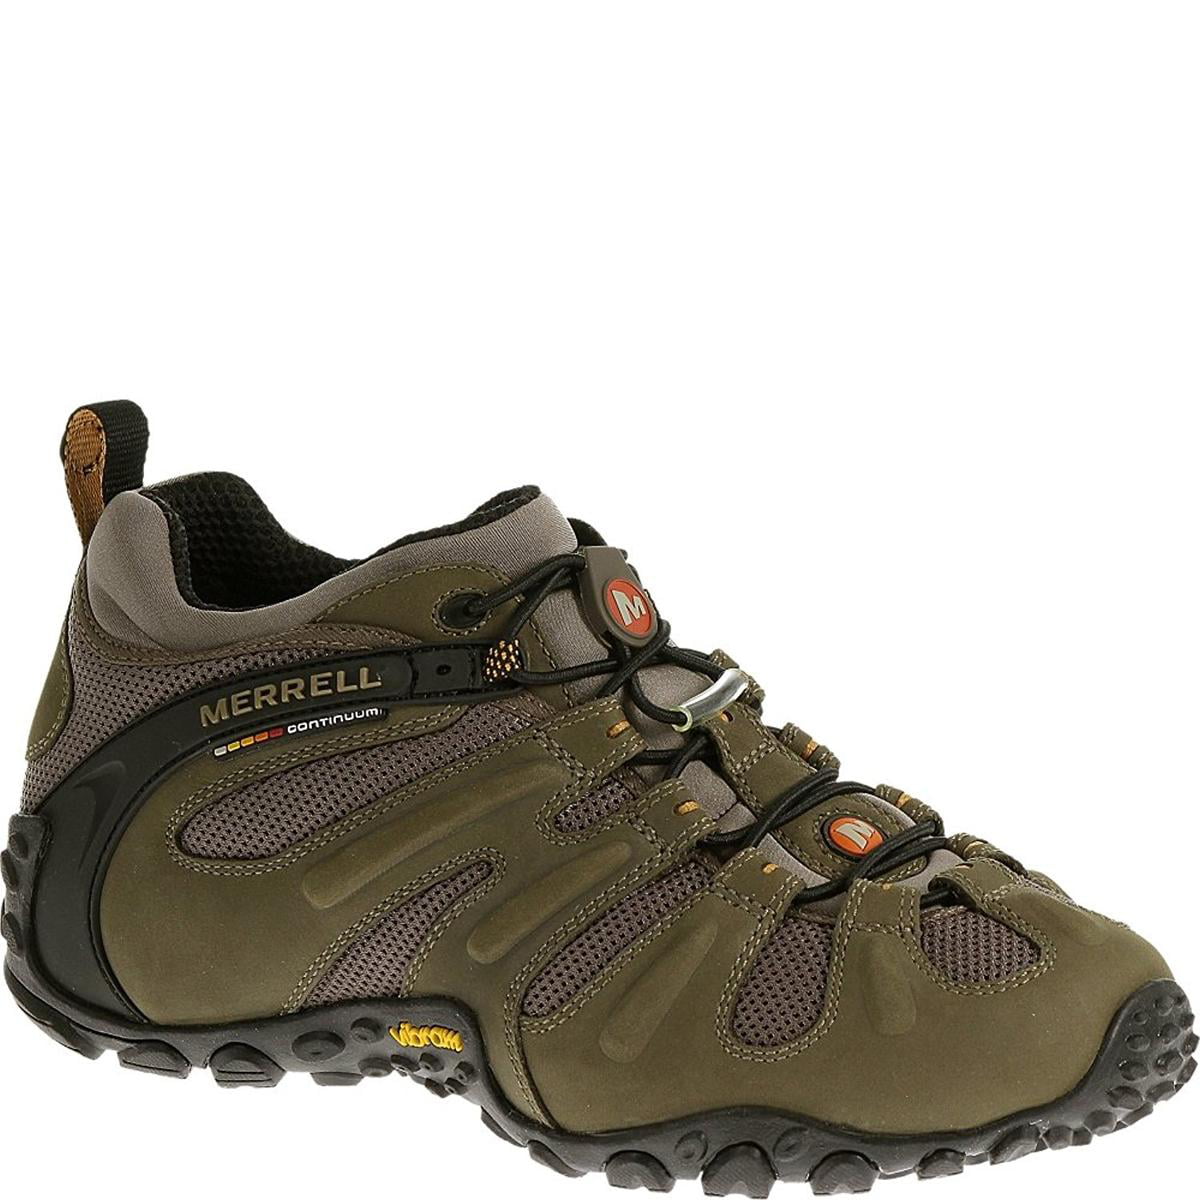 MERRELL Chameleon II Stretch J598323 Trekking Hiking Outdoor Trainers Shoes Mens 